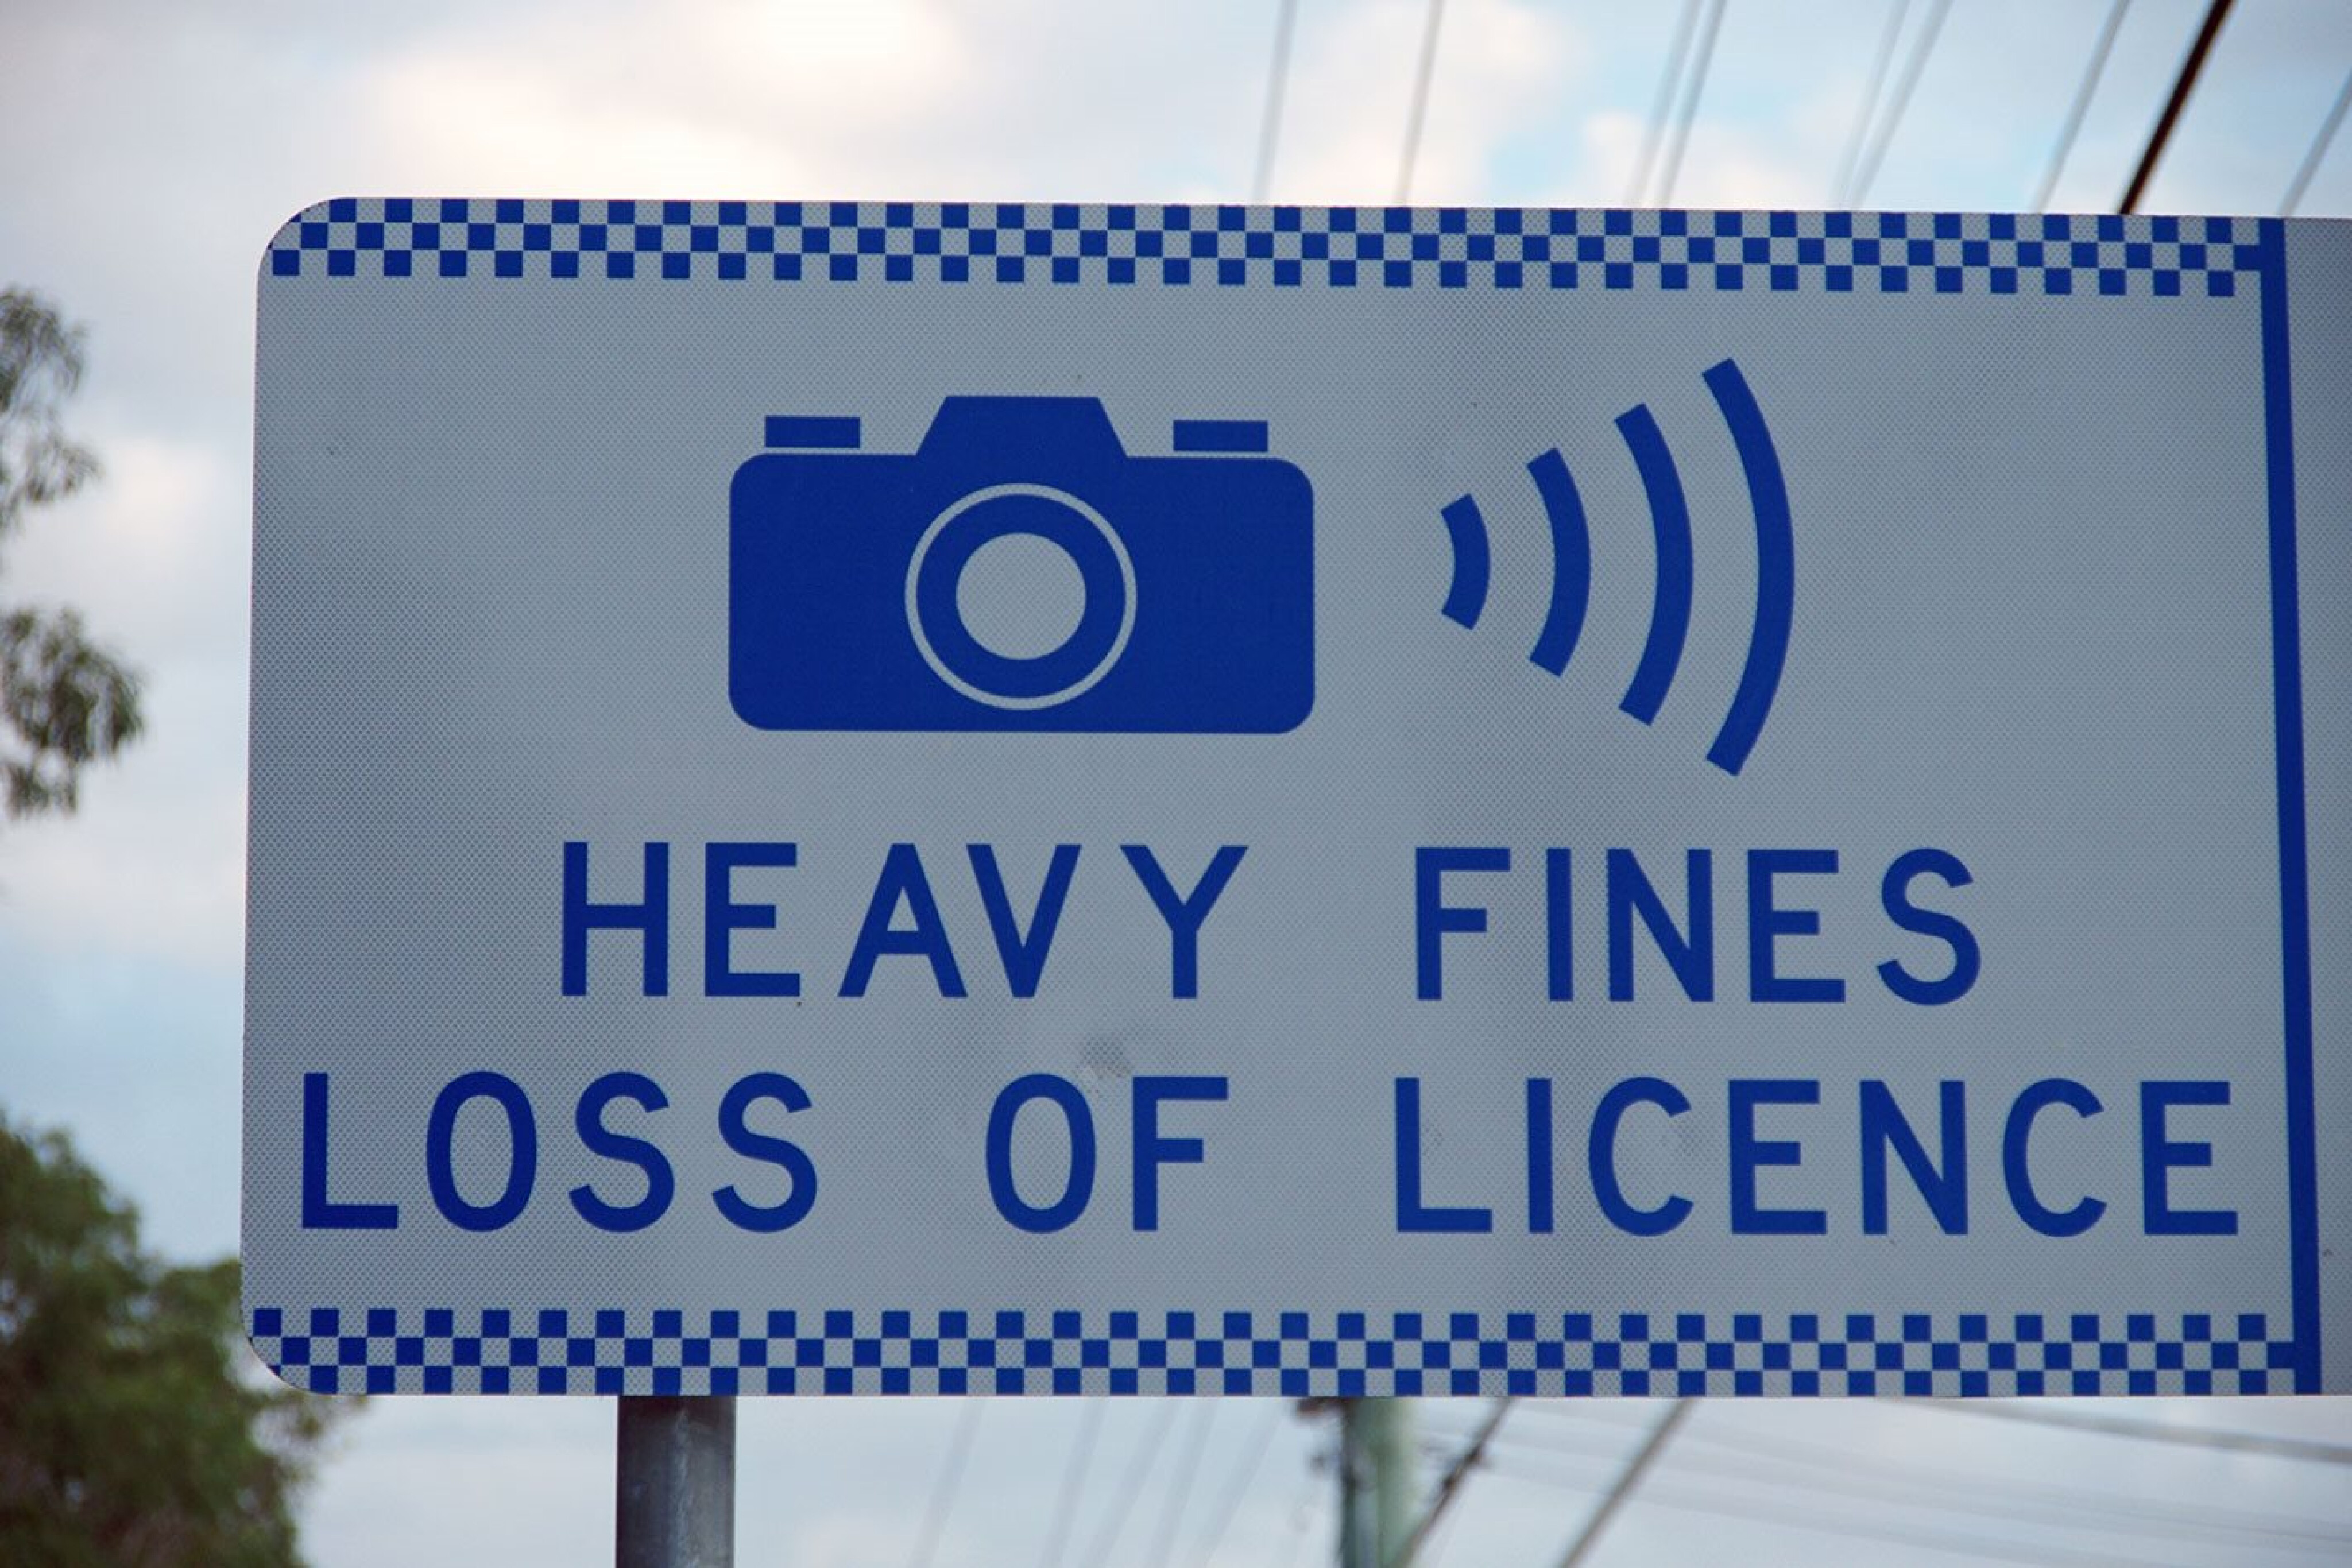 b4230981/speeding fines sign 1422 jpg